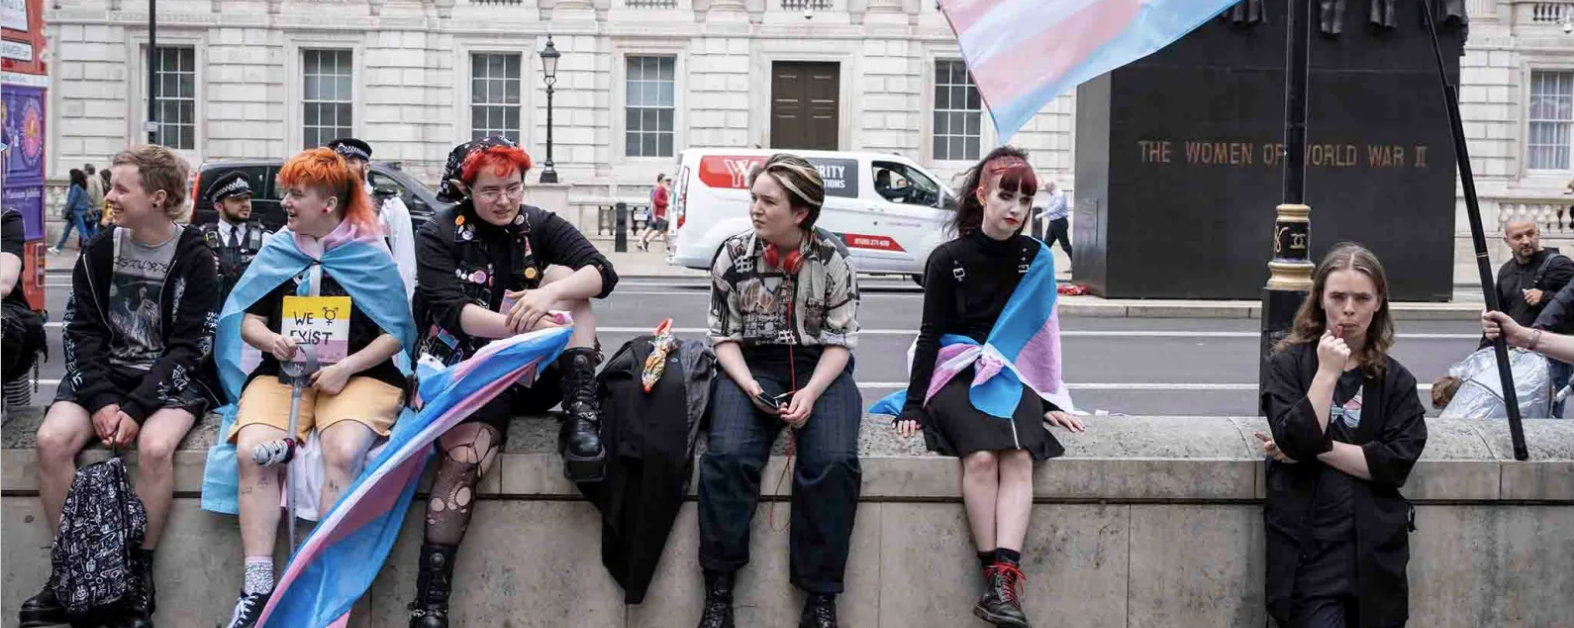 Trans-gender teens near Westminster England